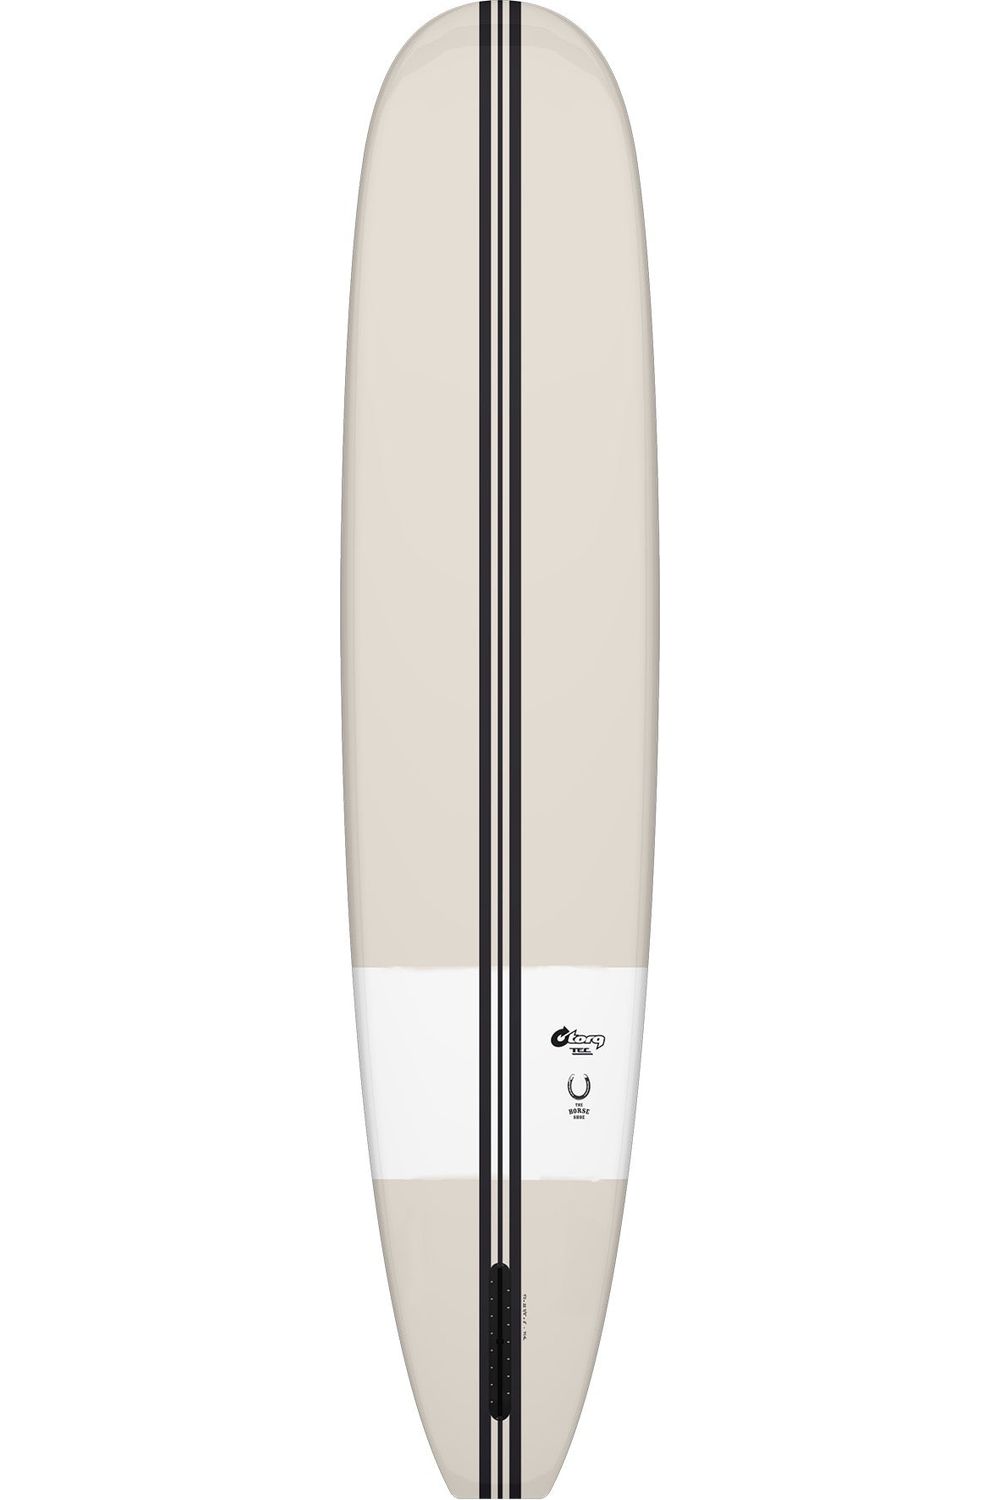 Torq TEC The Horseshoe Surfboard: Stone/White (Gen 2)